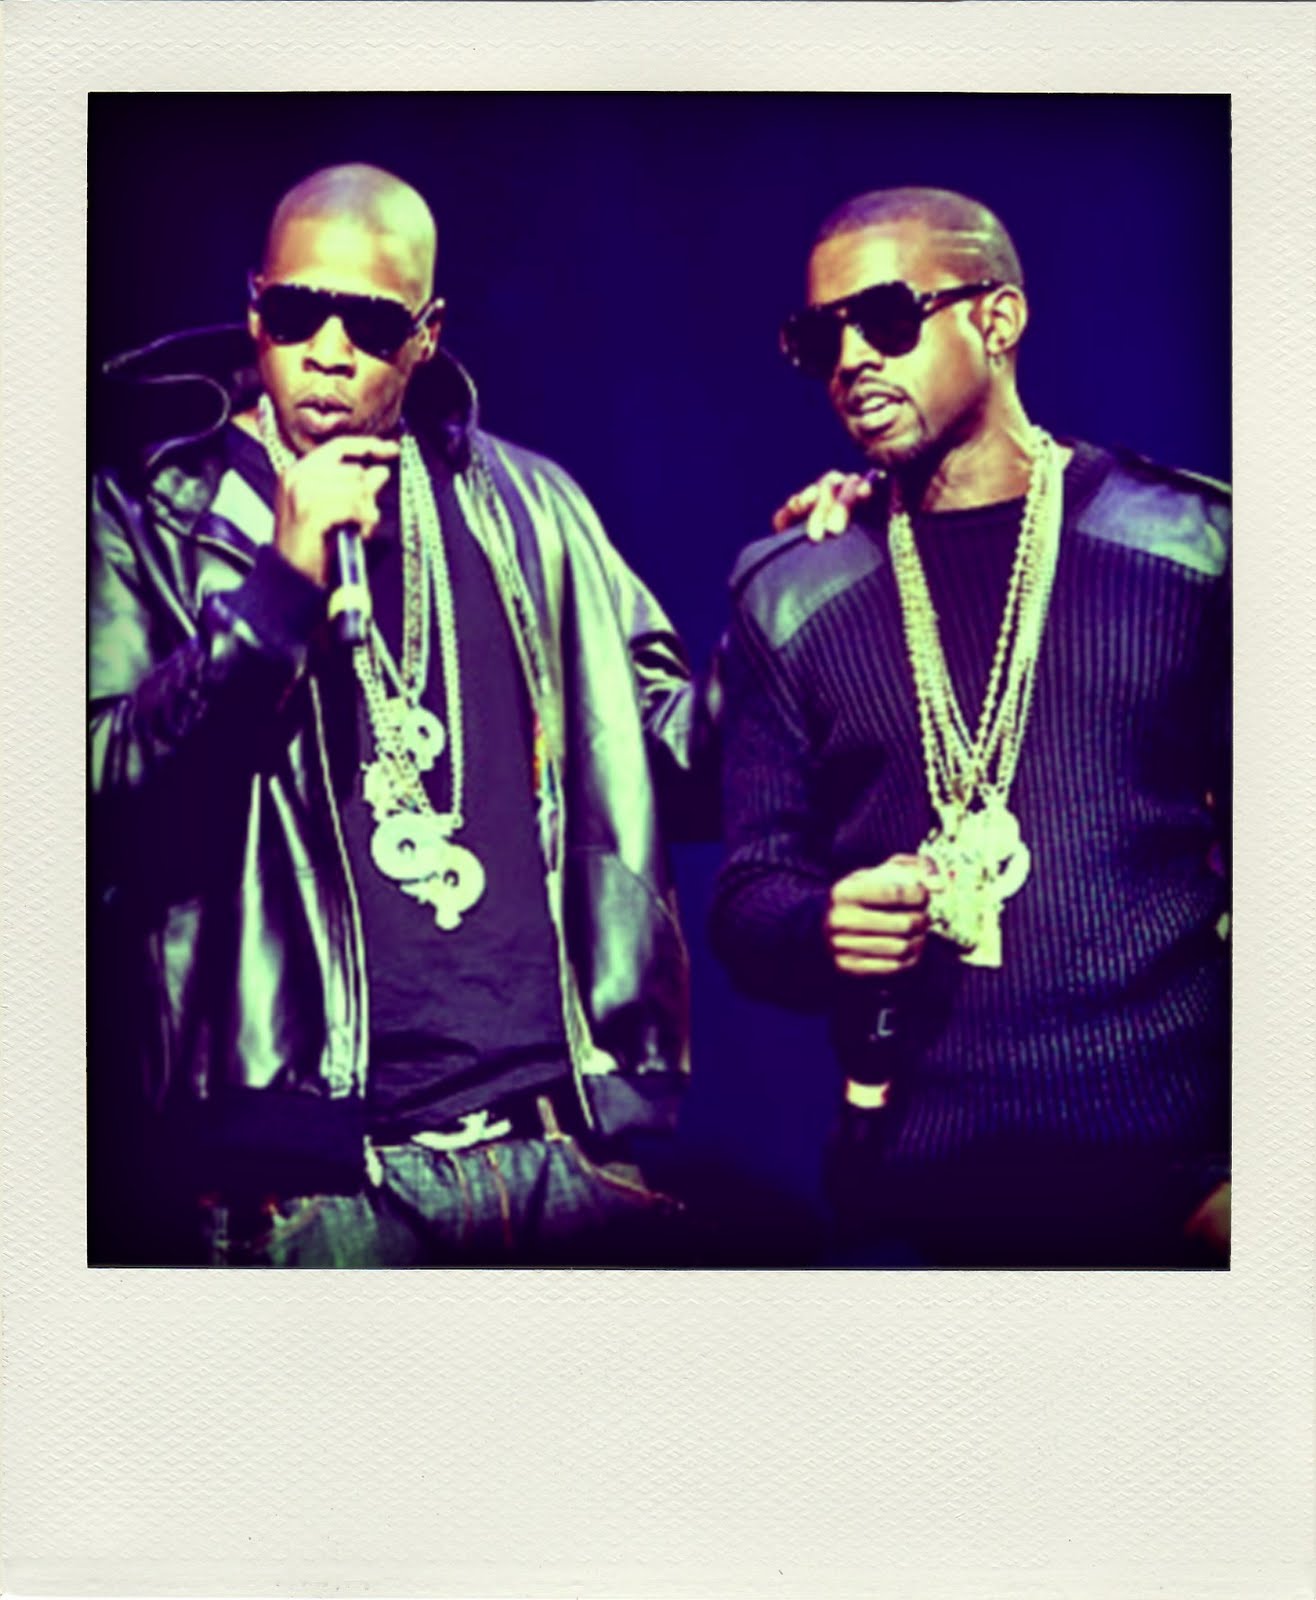 https://blogger.googleusercontent.com/img/b/R29vZ2xl/AVvXsEjlFgCvm2Be7HW31l-79K60nmme5TnQYKksXkyT0OcBRMaa5wAp5rUdi0TcksyWWKeSs4tU1OdnB11Jih0uodOQDOOIcadJkams9etKMDOyZFlEA0hAtl43s9JPRTgFmsUx5pZcGtelGPw/s1600/wpid-Jay-Z-Kanye-West-pola.jpg